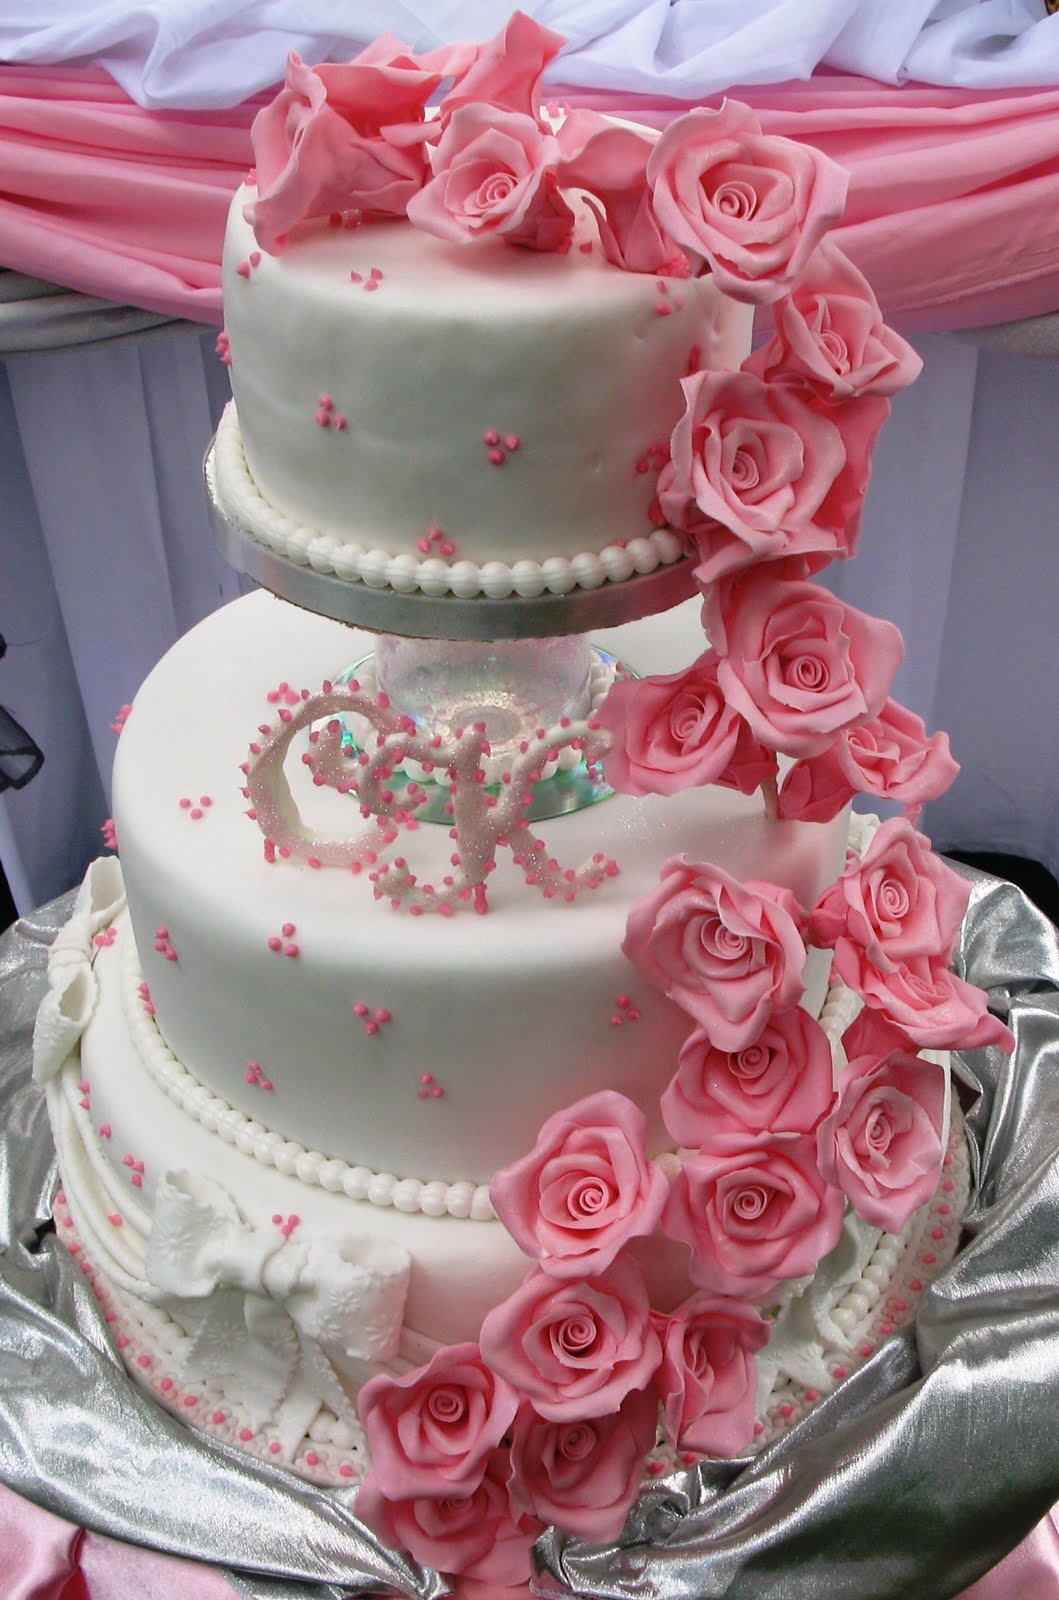 beautiful wedding cake Three - Tier Wedding Cake & Roses